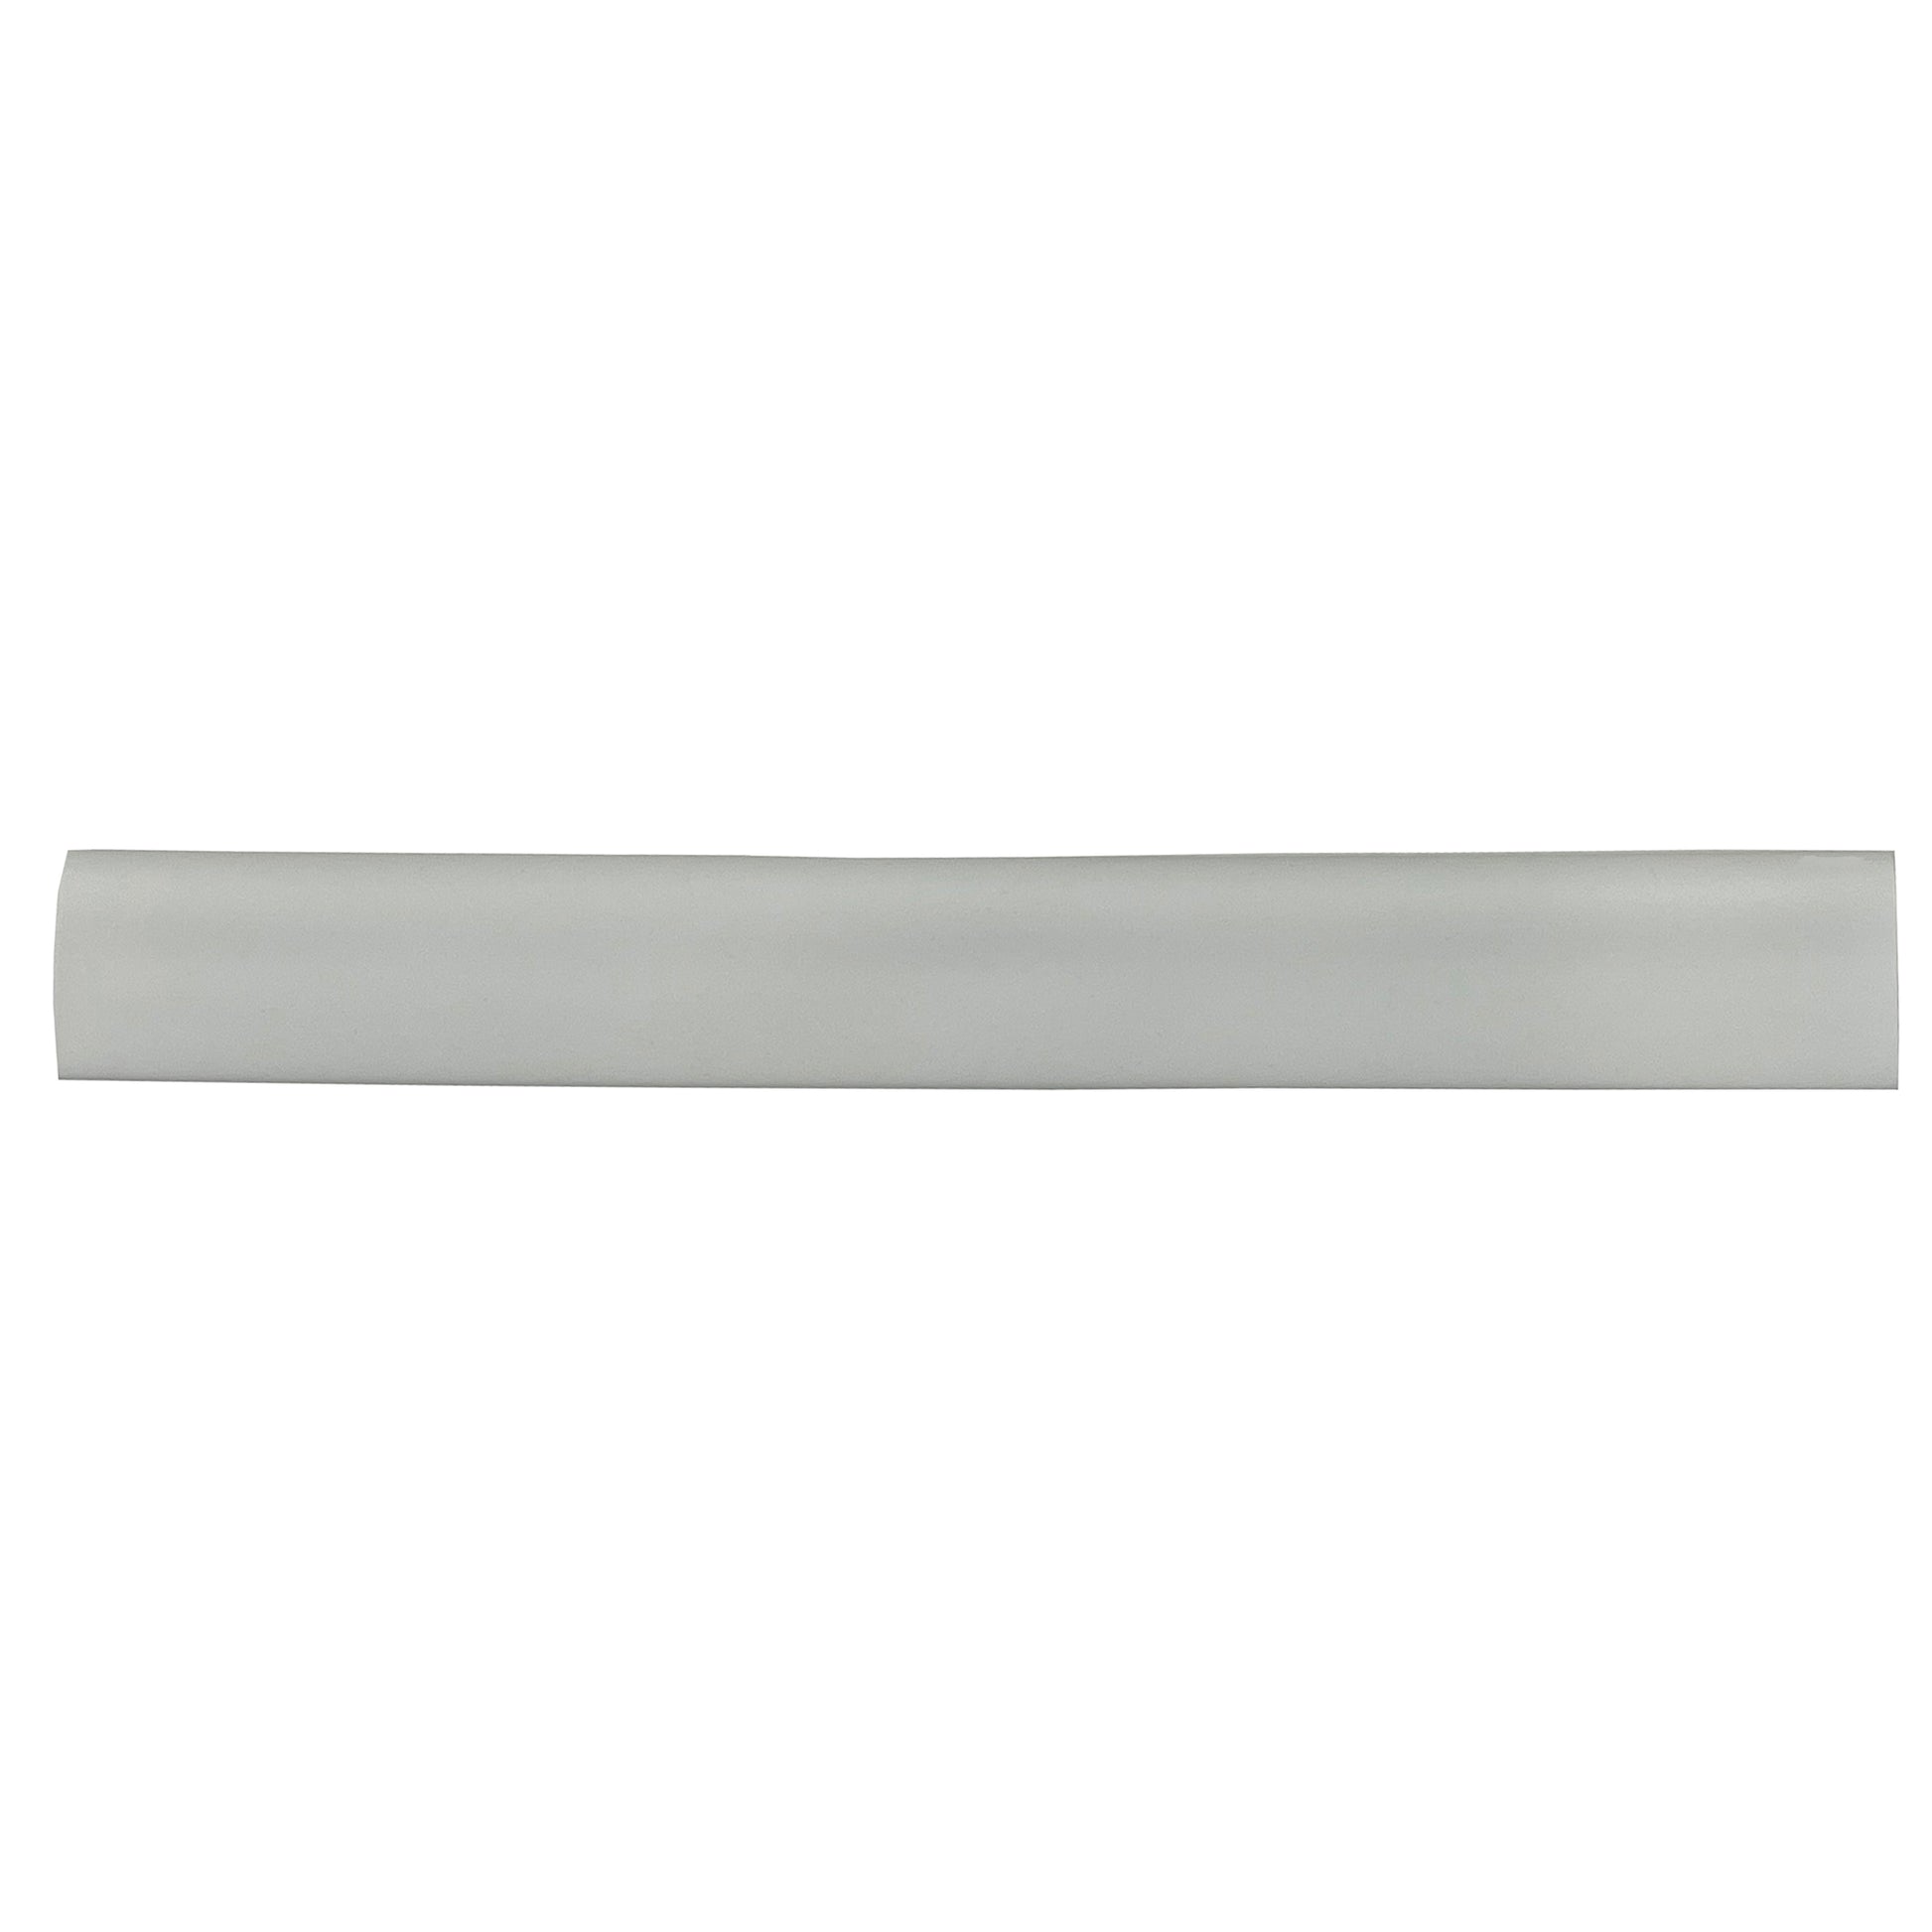 Flexible Thin Single Wall Non-Adhesive Heat Shrink Tubing 2:1 White 1/2" ID - 25' Ft Spool